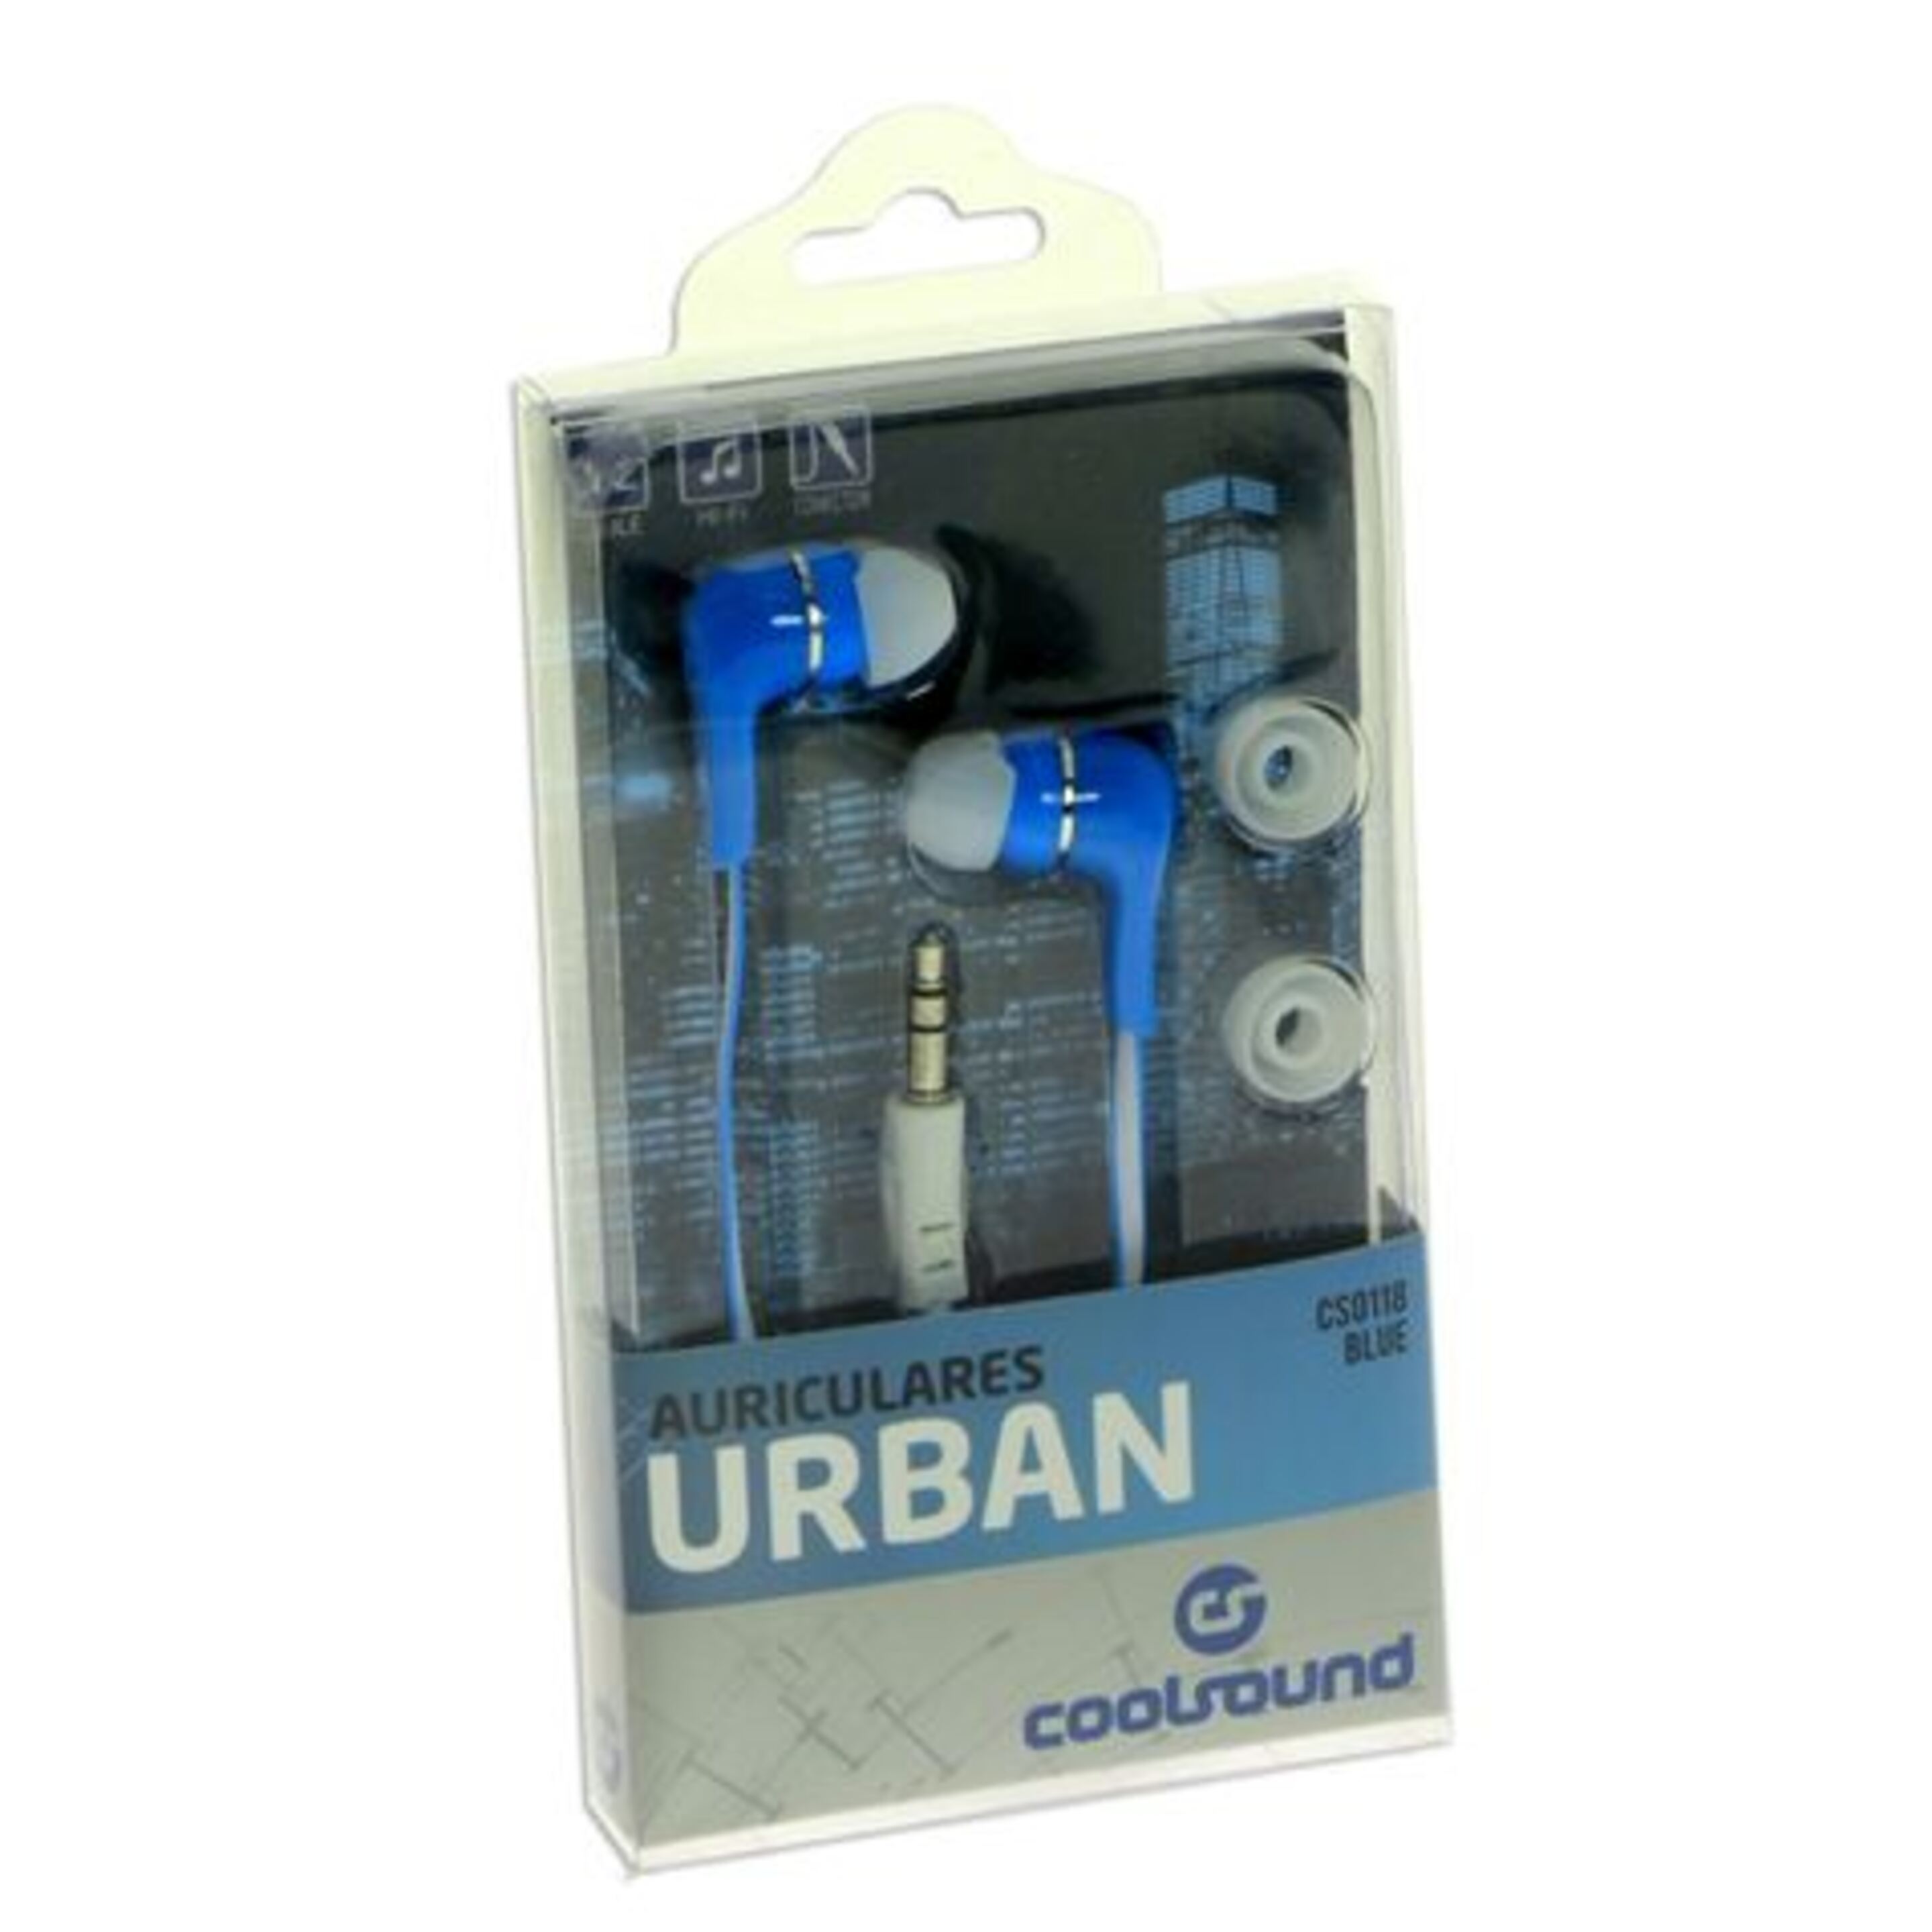 Auriculares Urban In-ear Azul Coolsound